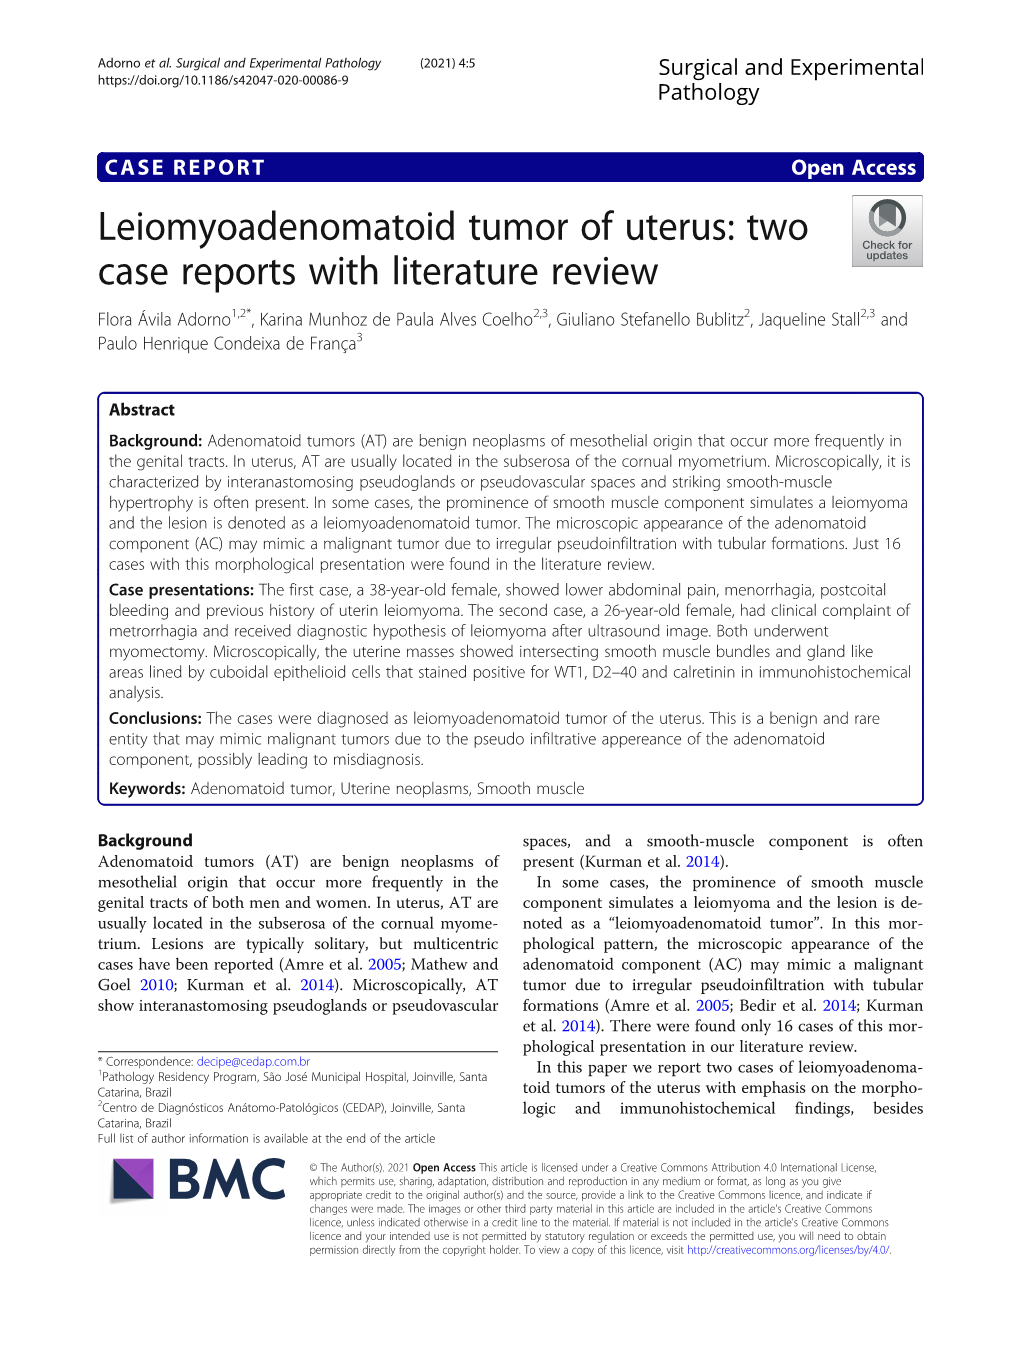 Leiomyoadenomatoid Tumor of Uterus: Two Case Reports with Literature Review